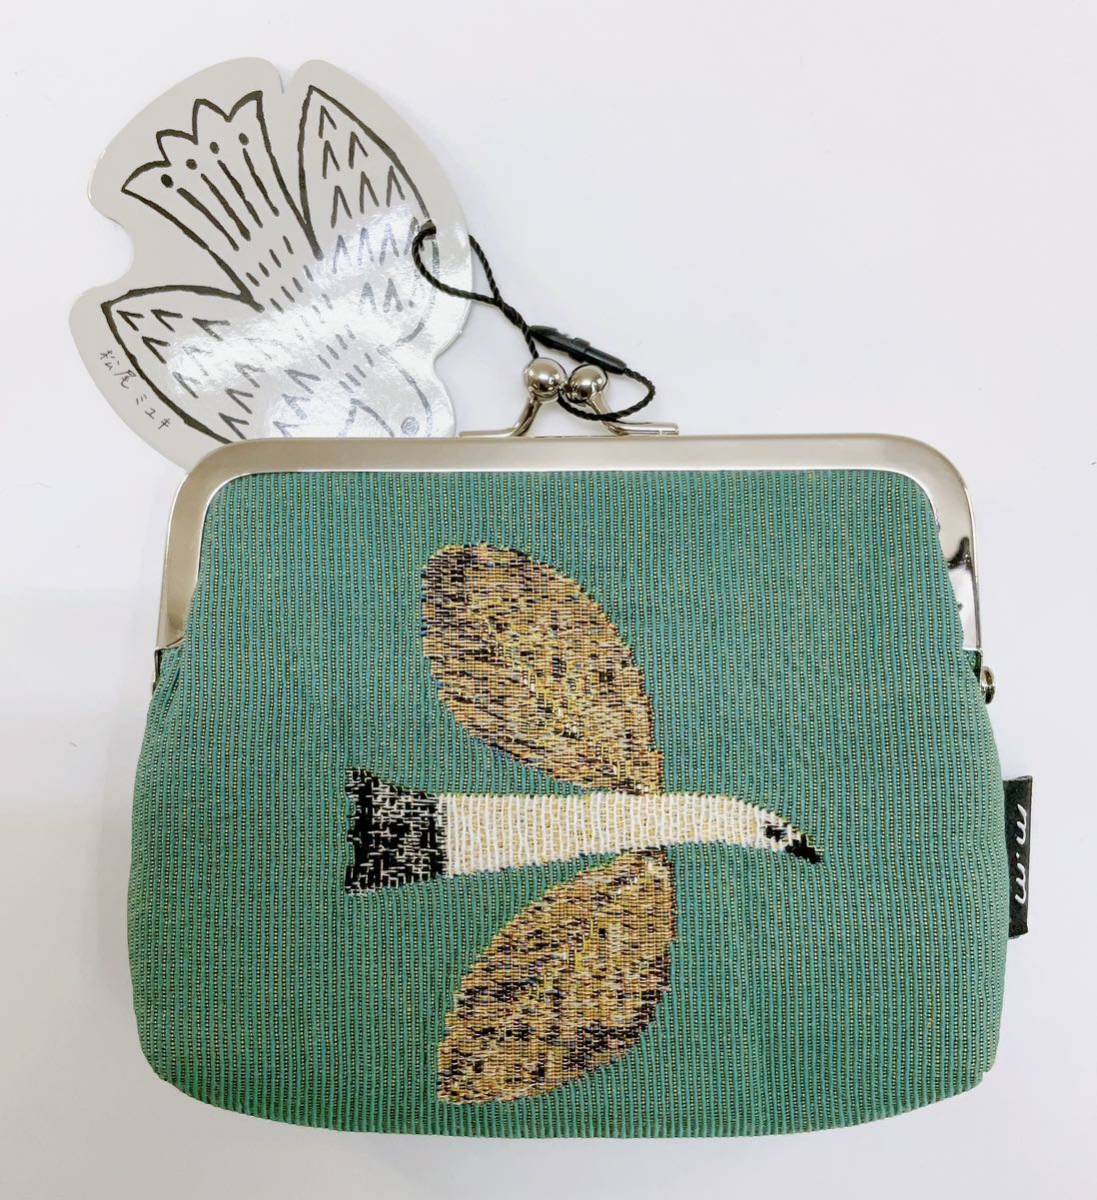  bulrush . pouch [ Matsuo miyuki bird bird ] bulrush . flat pouch case change purse . make-up pouch new goods unused goods tag attaching nationwide free shipping 